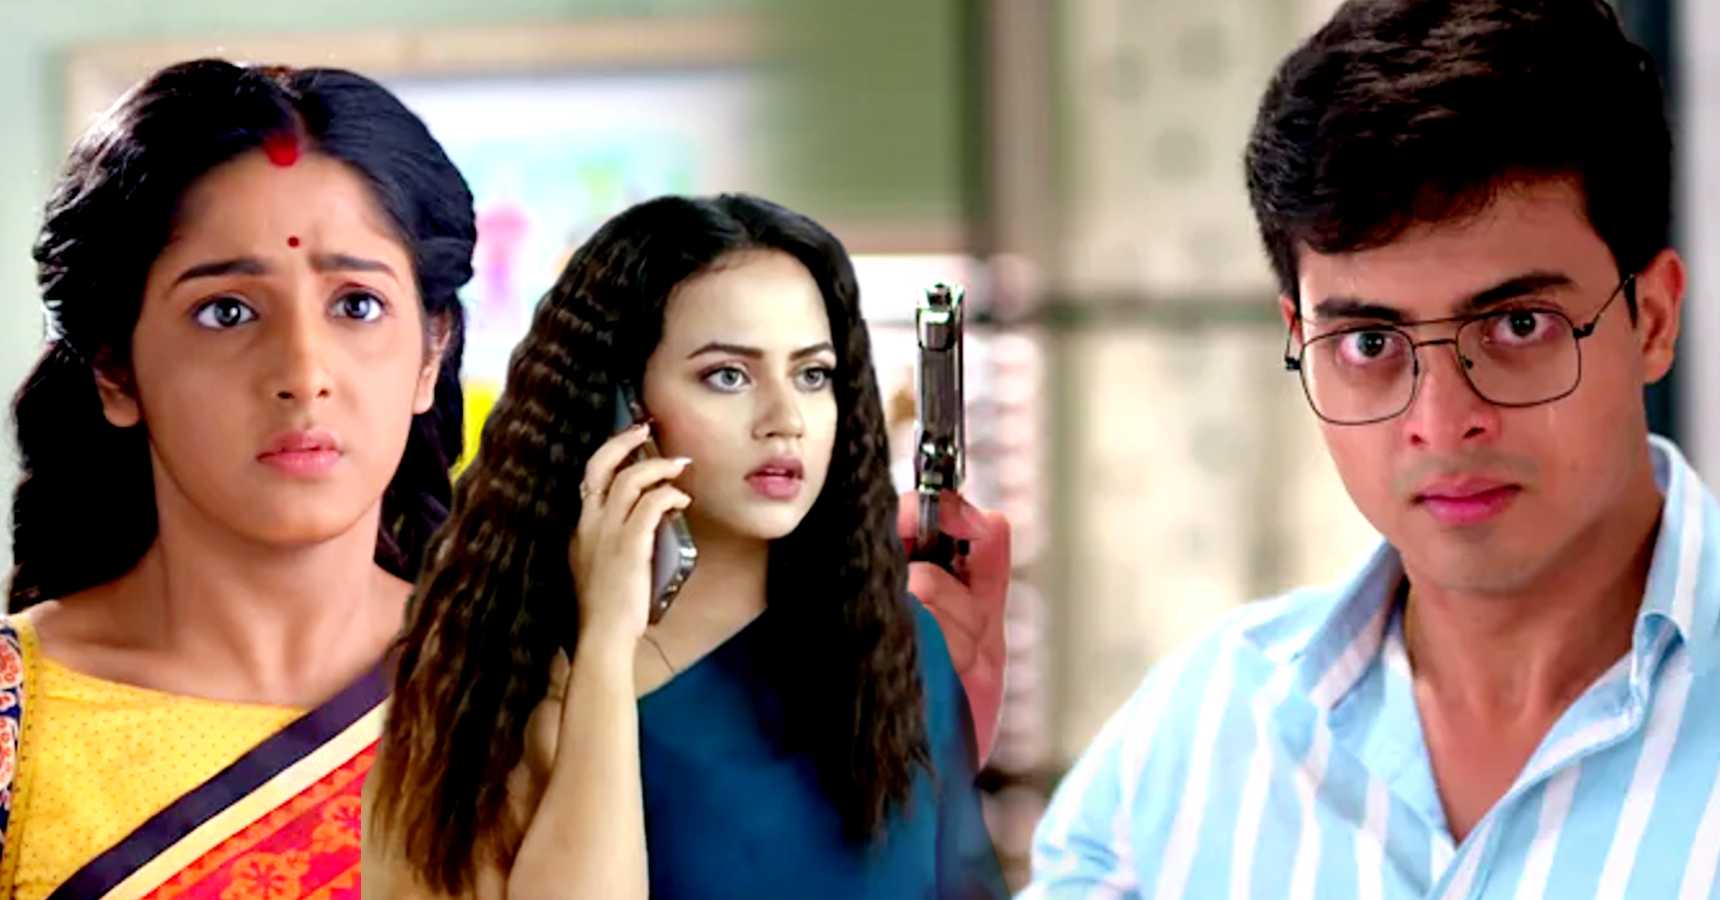 Surjo shot Misshka Deepa's new Challange to proof surjo innocent Anurager Chhowa new promo on air